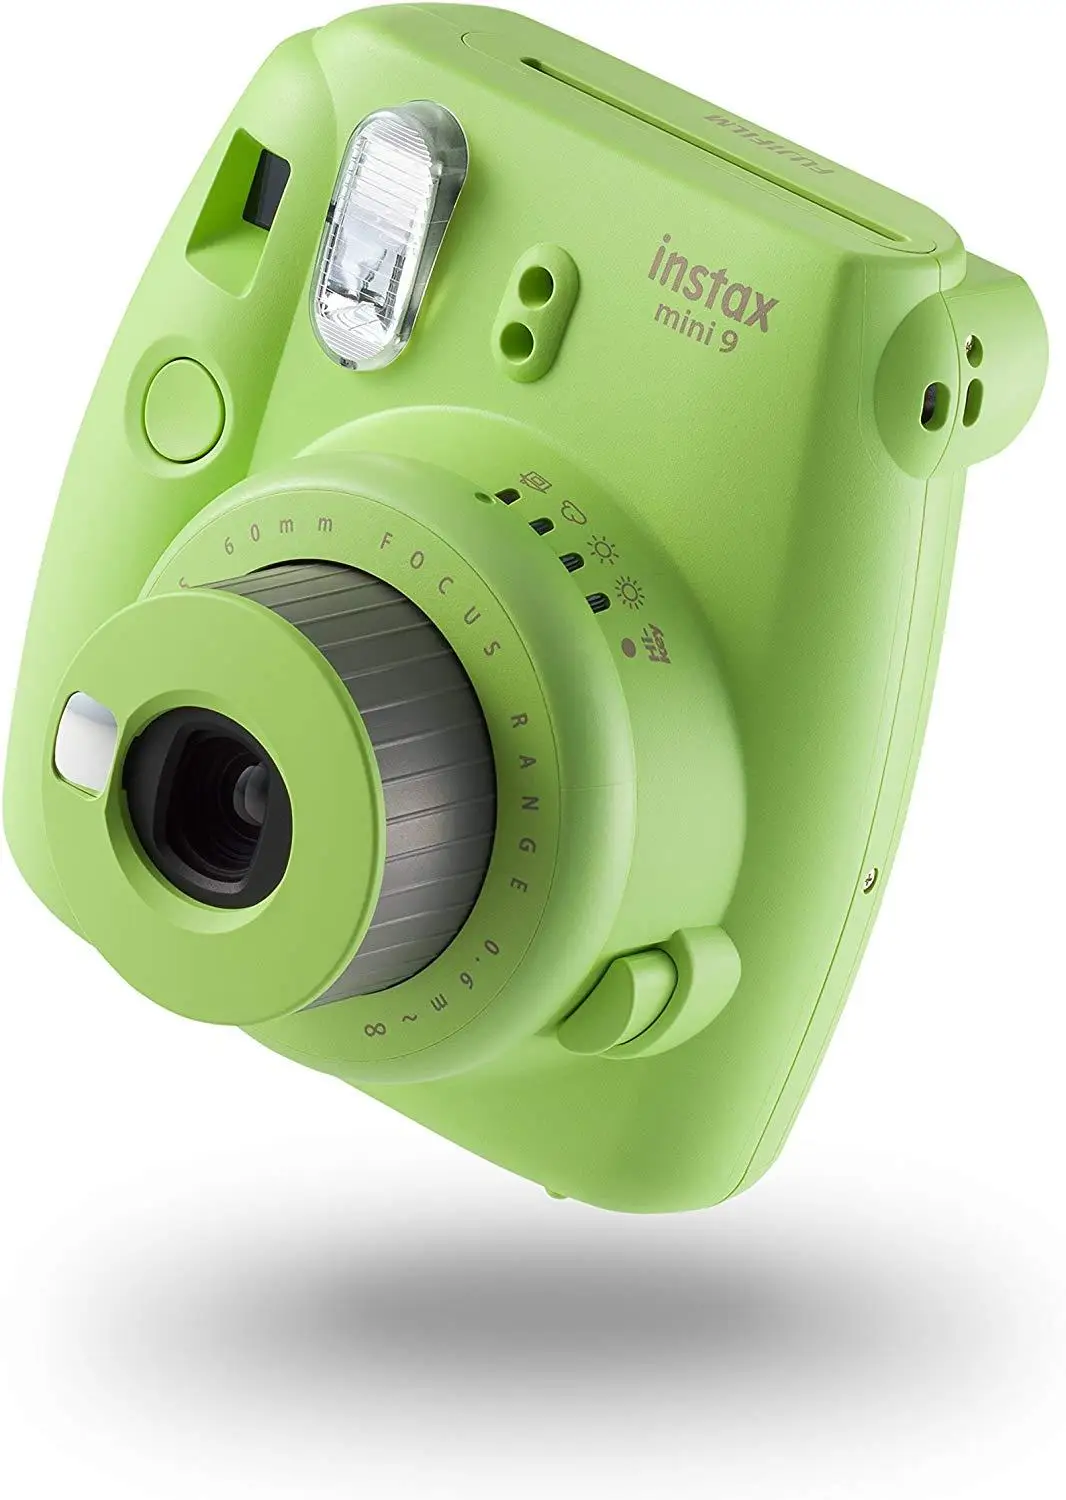 Instax Mini 9 цифровая камера Fujifilm фото HIFI-KEY видеокамеры для селфи Polaroid мгновенная пленка камера с Instax фотобумаги